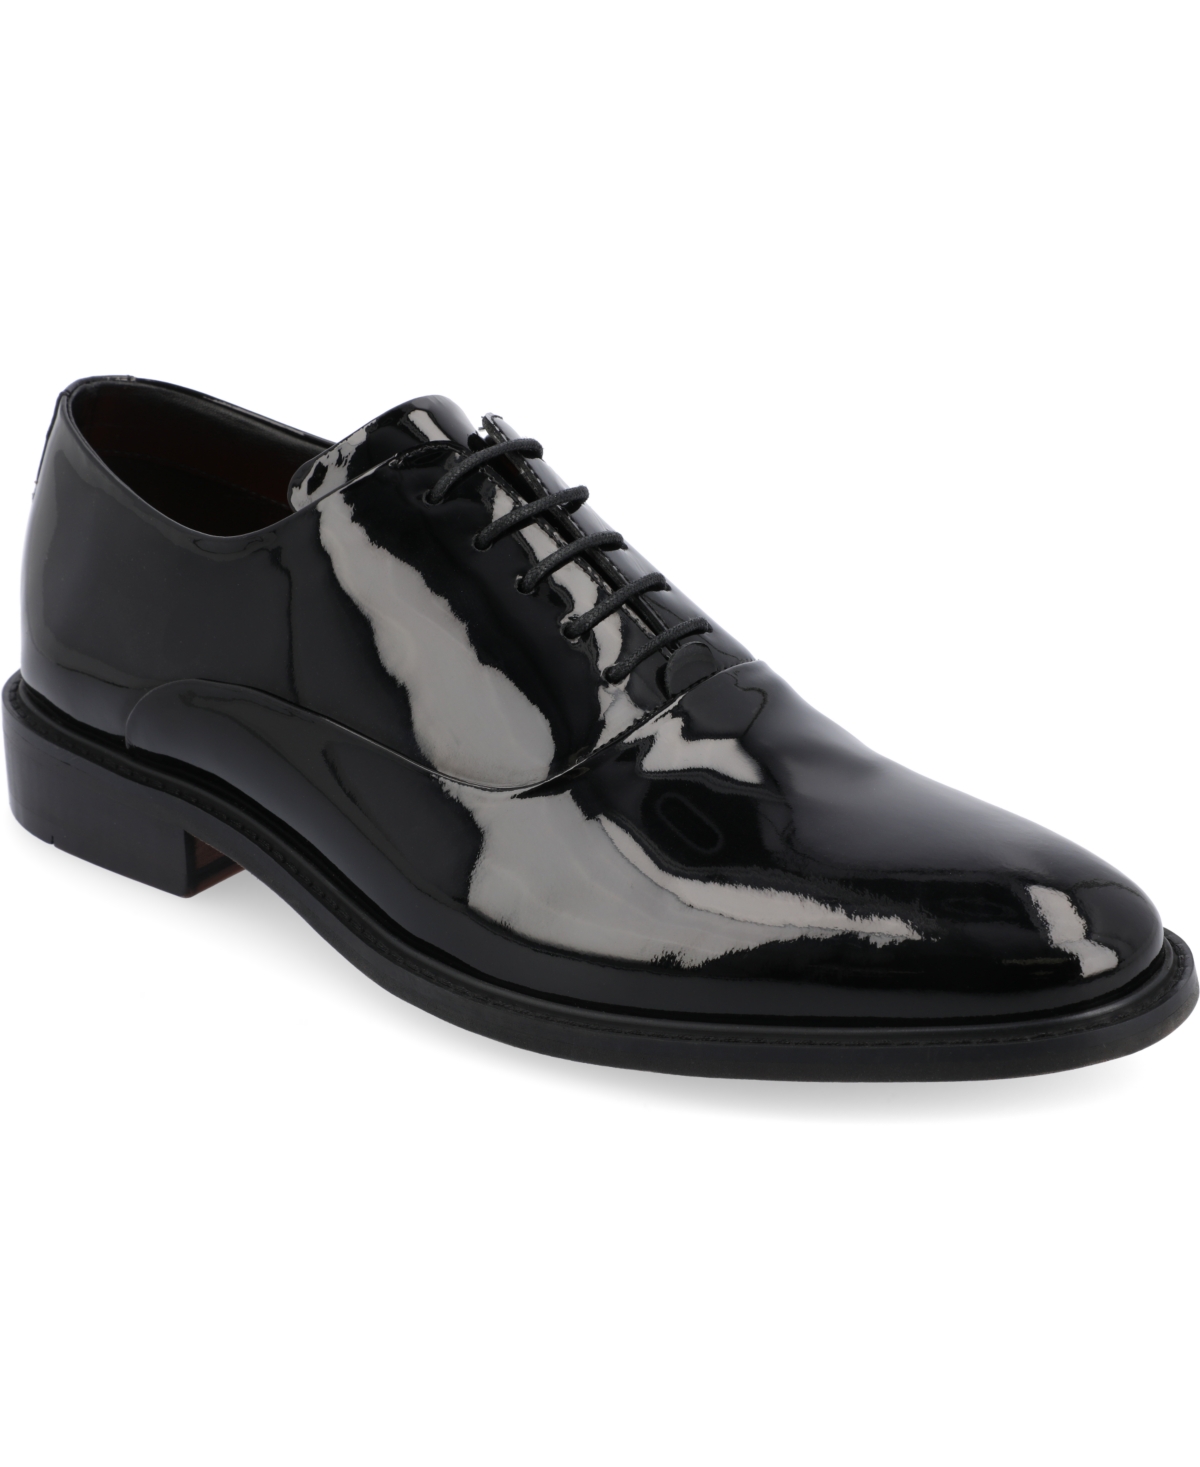 Men's Bledsoe Tru Comfort Foam Patent Plain Toe Oxford Dress Shoes - Patent, Black